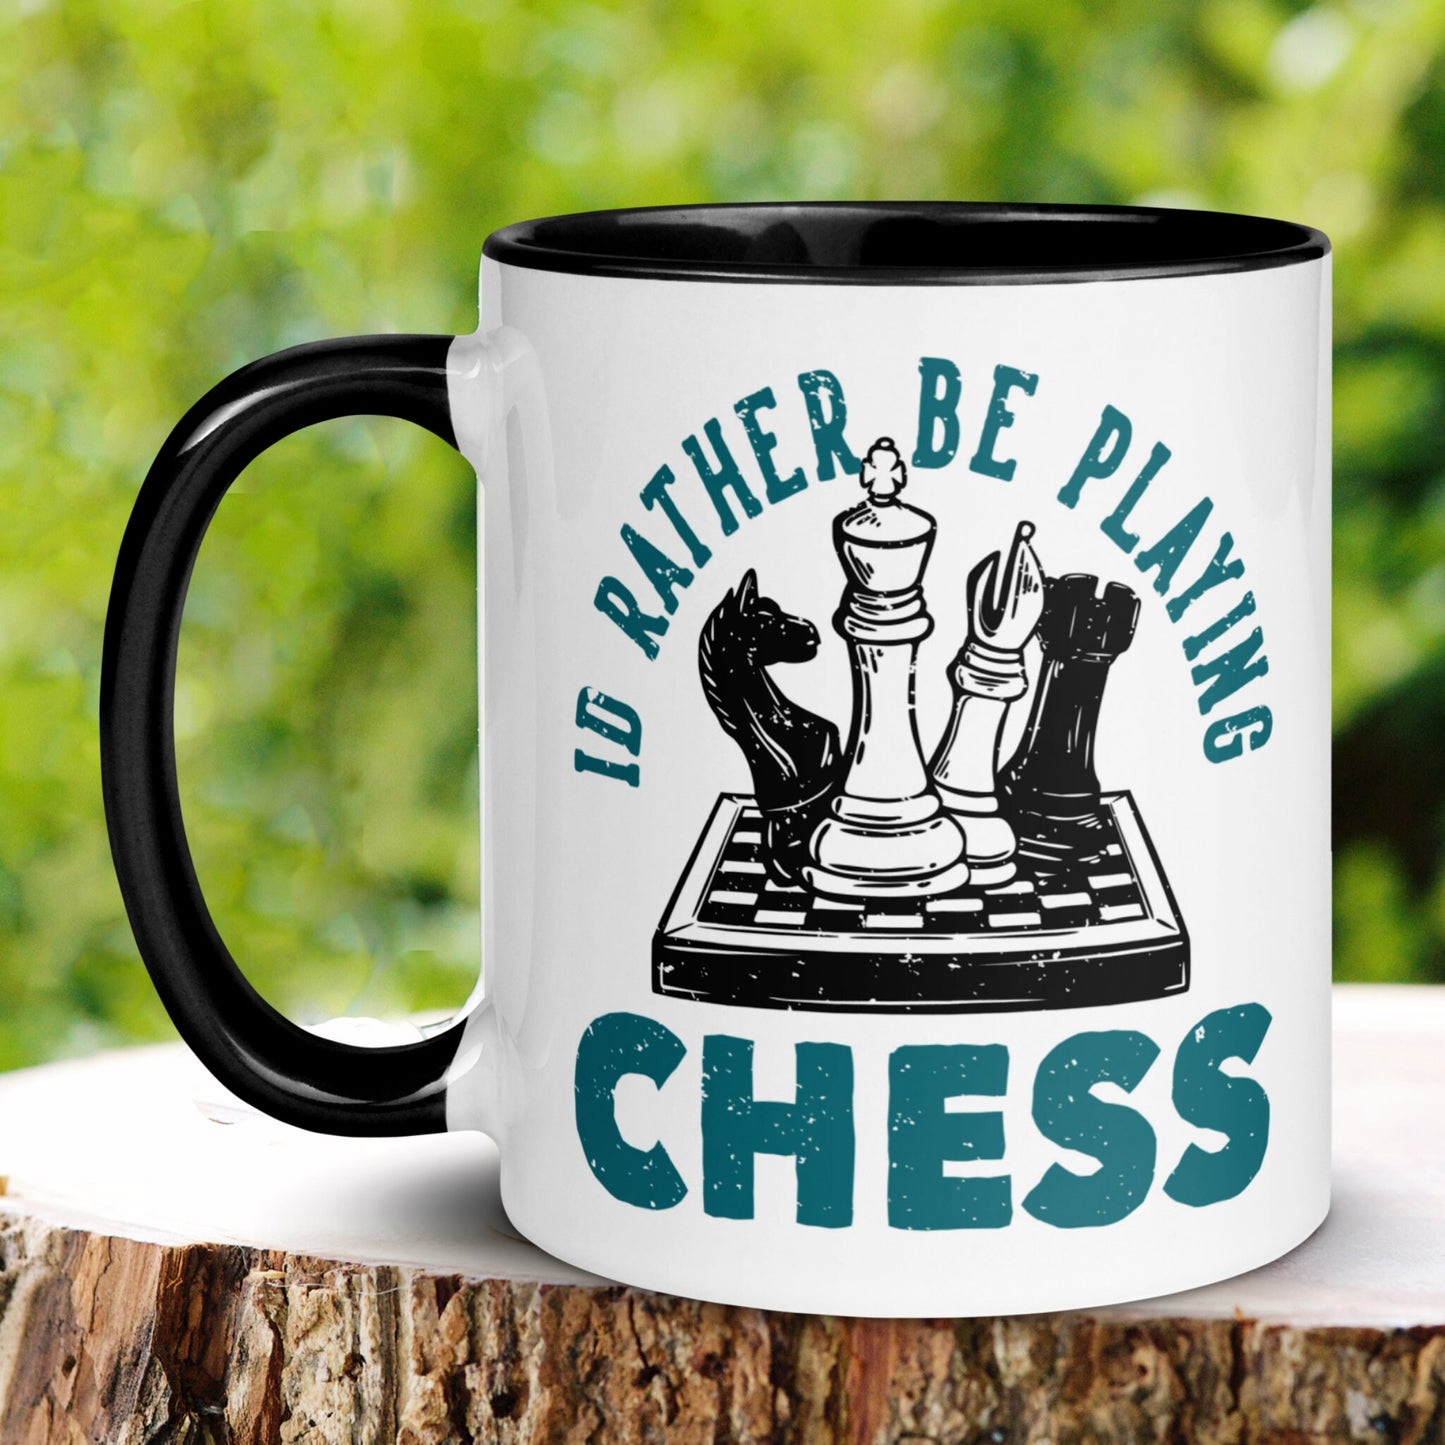 Chess Lover Mug, I'd Rather Be Playing Chess Mug - Zehnaria - HOBBIES & TRAVEL - Mugs